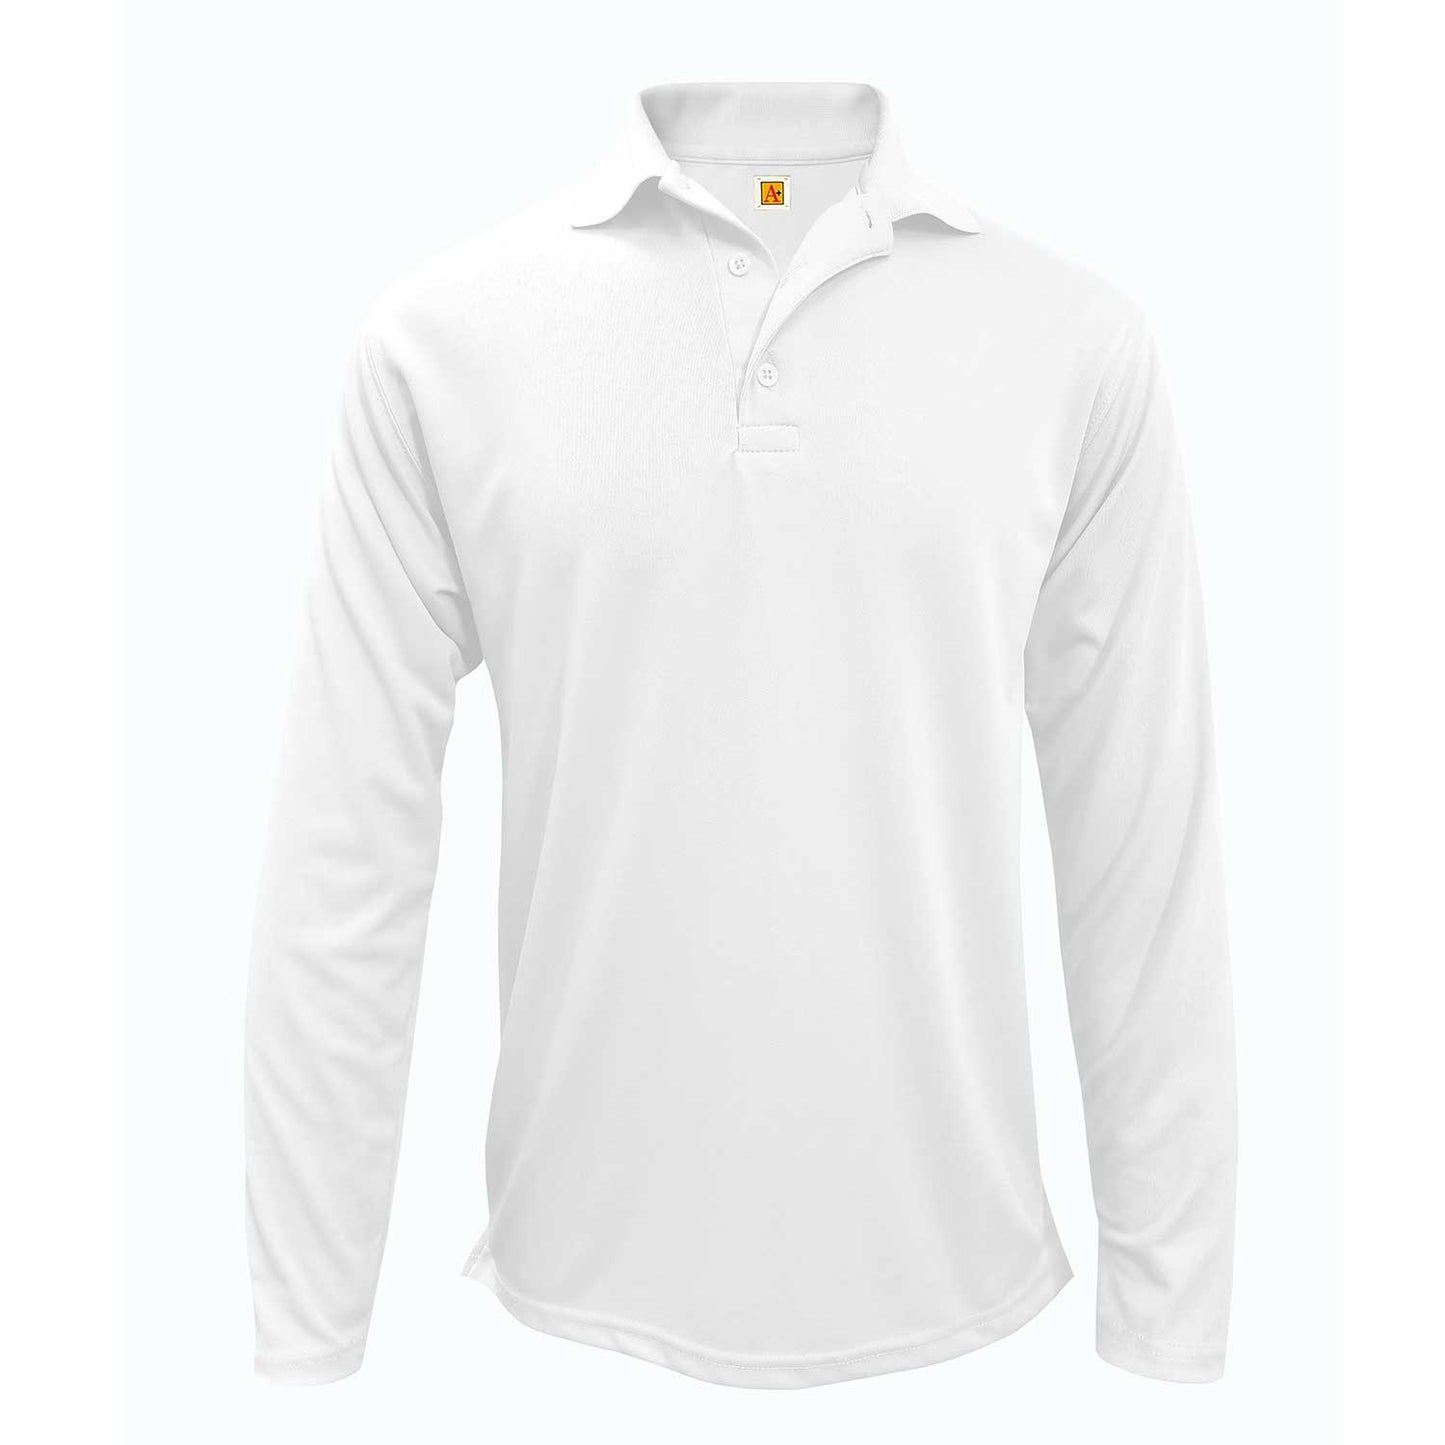 Performance Dri-Fit  Jersey Knit Long Sleeve Shirt (Unisex) w/Logo - 1121